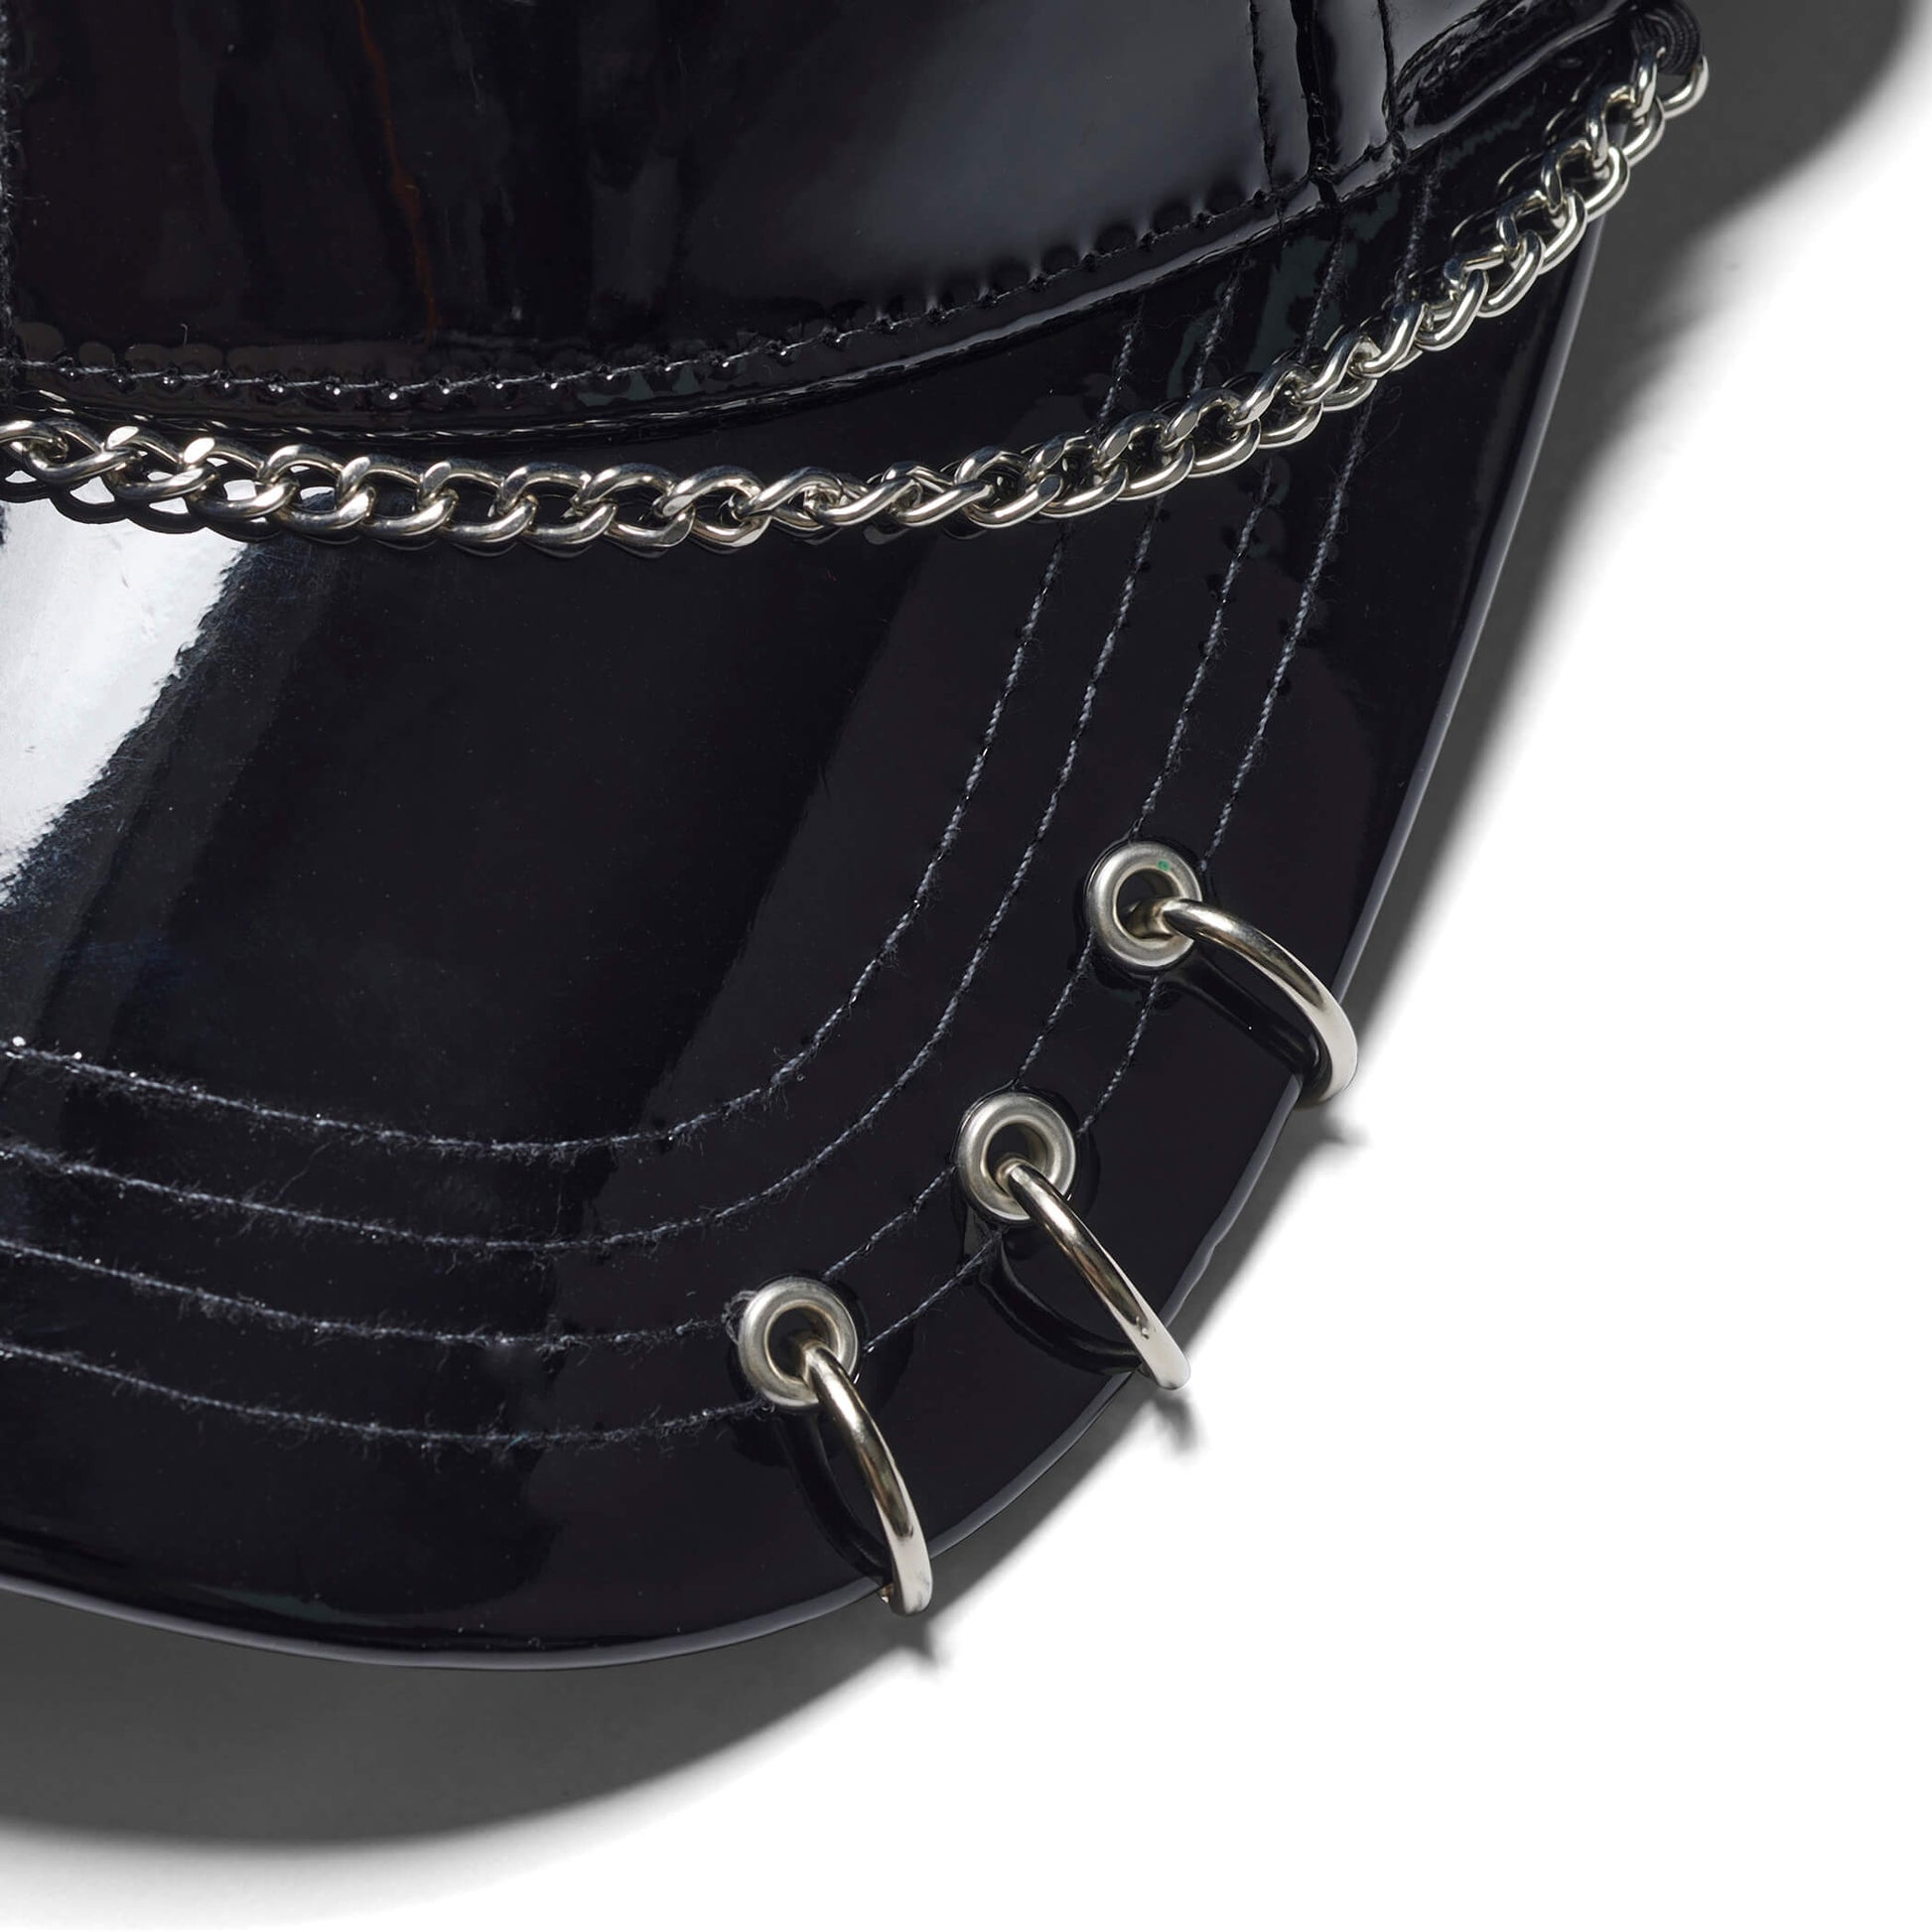 Malevolent Black Punk Cap - Accessories - KOI Footwear - Black - Front Detail